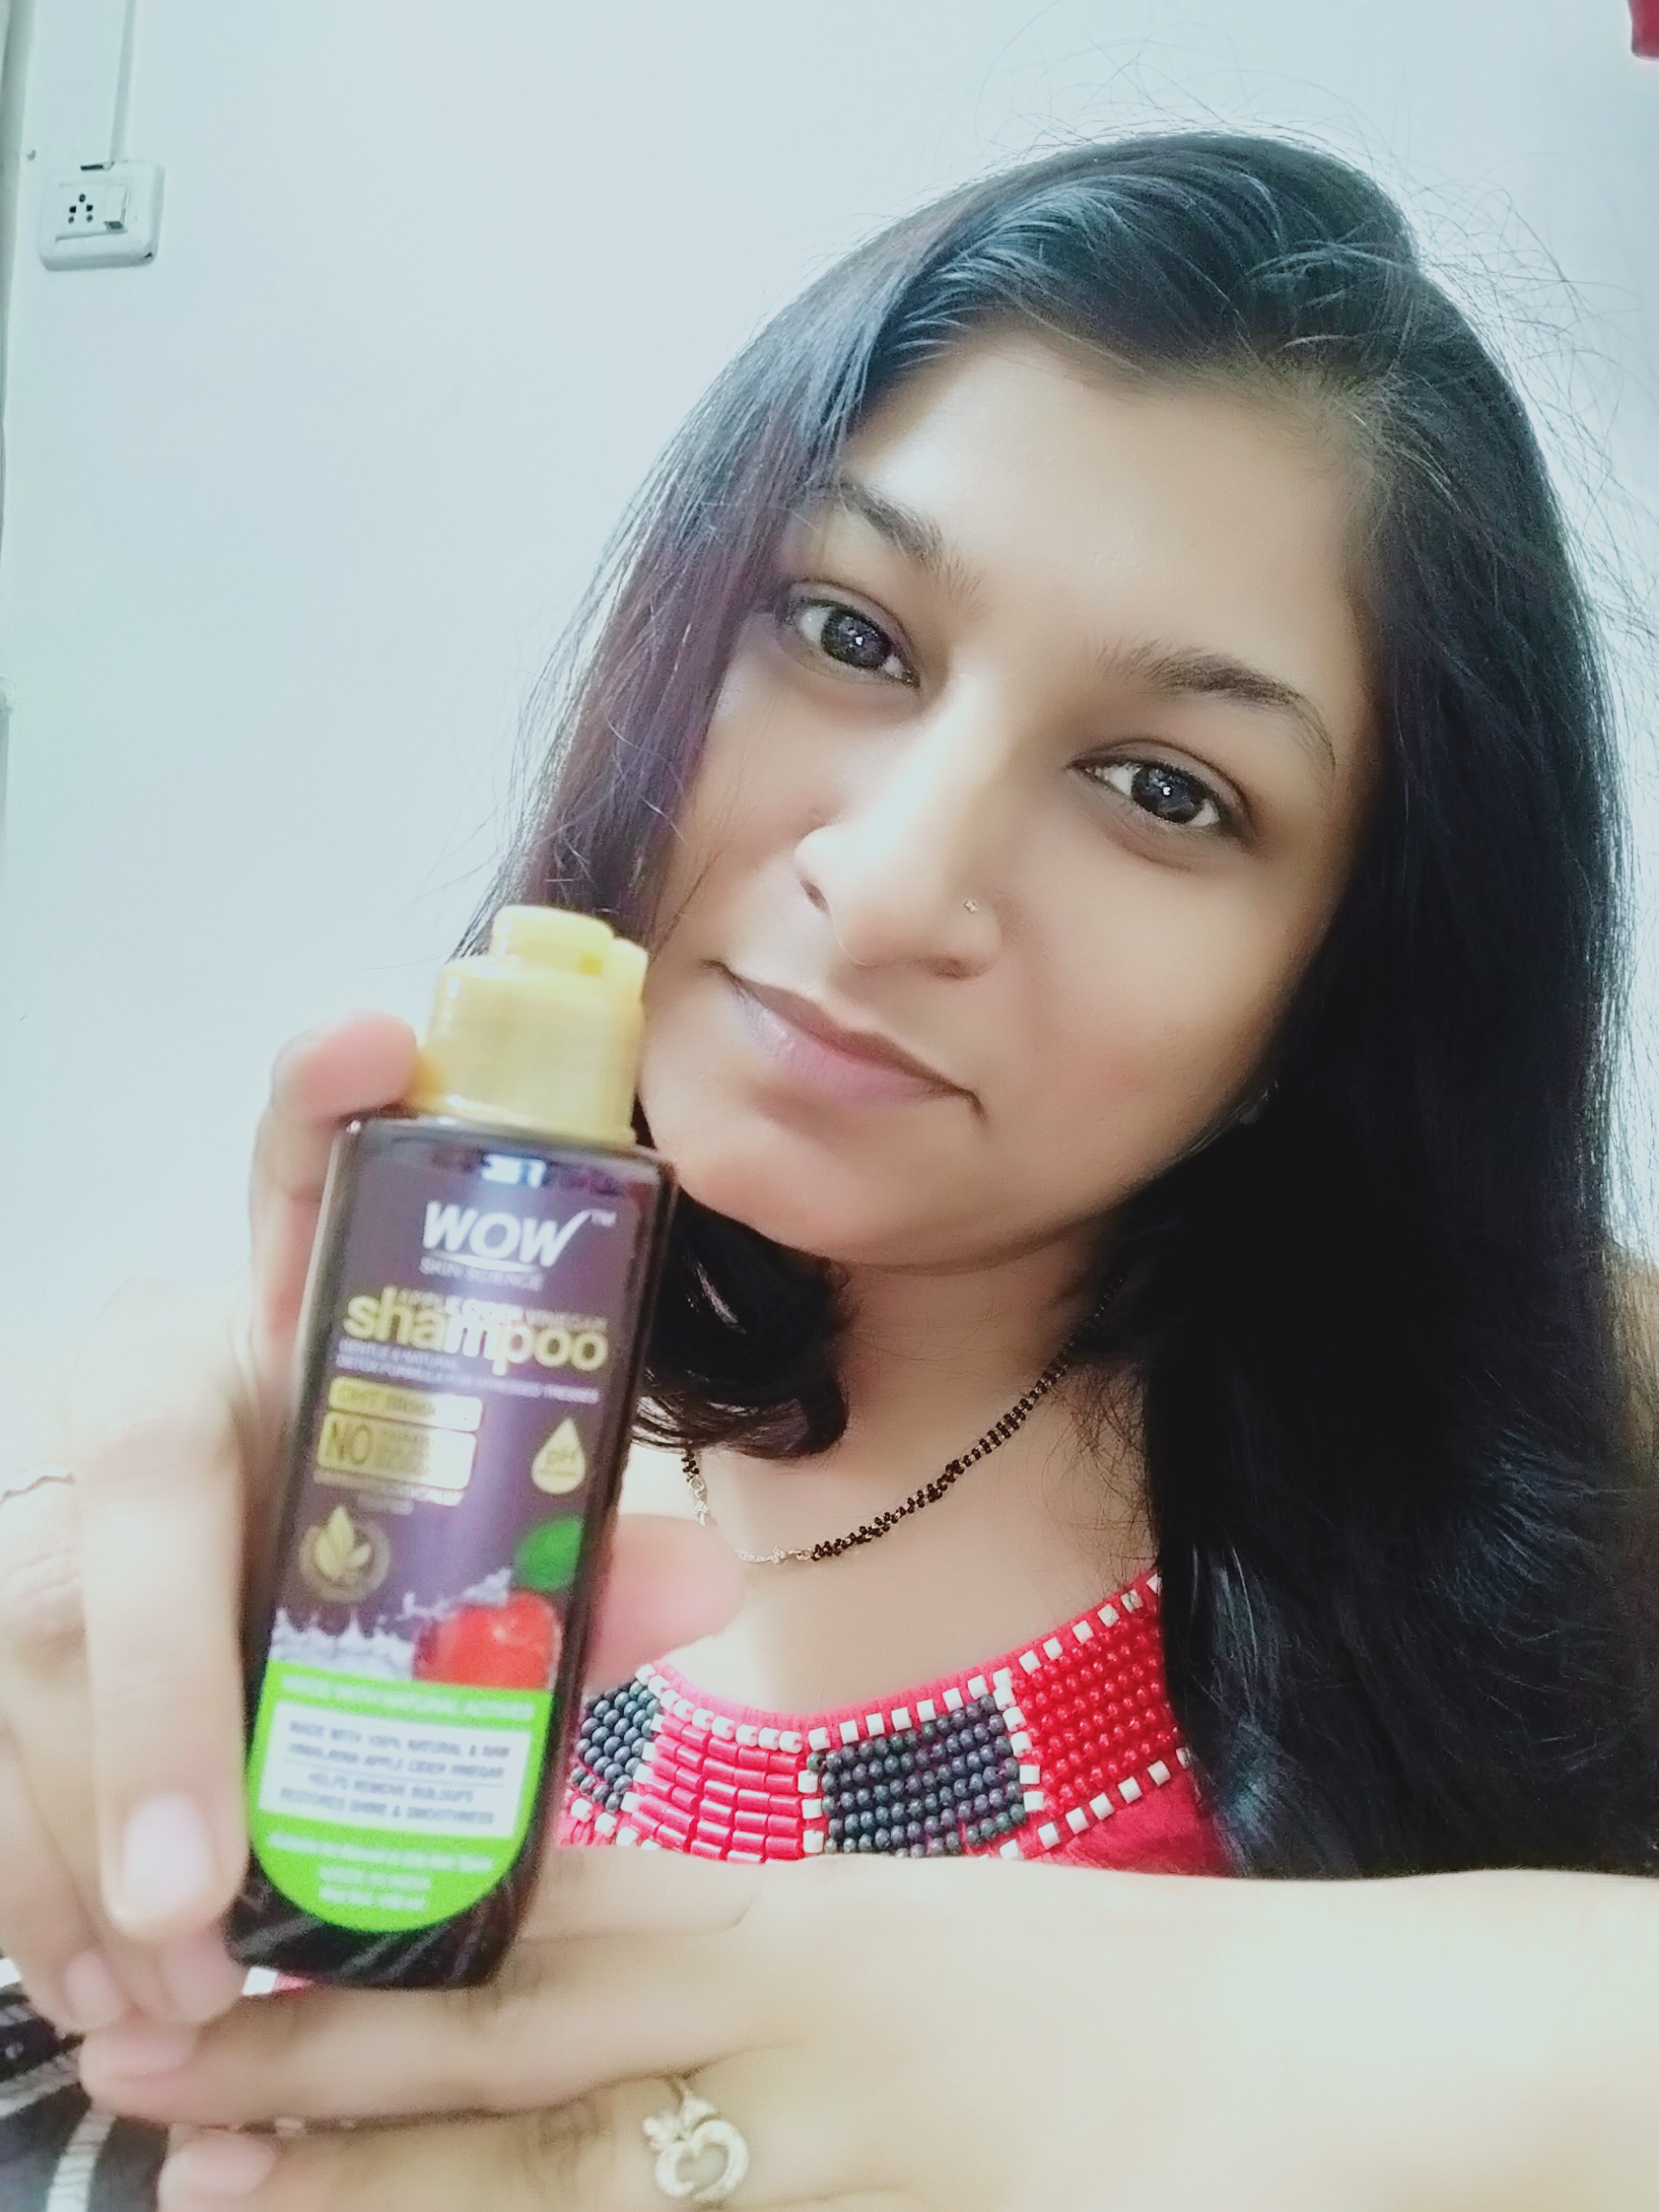 WOW Skin Science Apple Cider Vinegar Shampoo - No Parabens & Sulphate - 300 ml-Amazing shampoo-By kajal_harvara